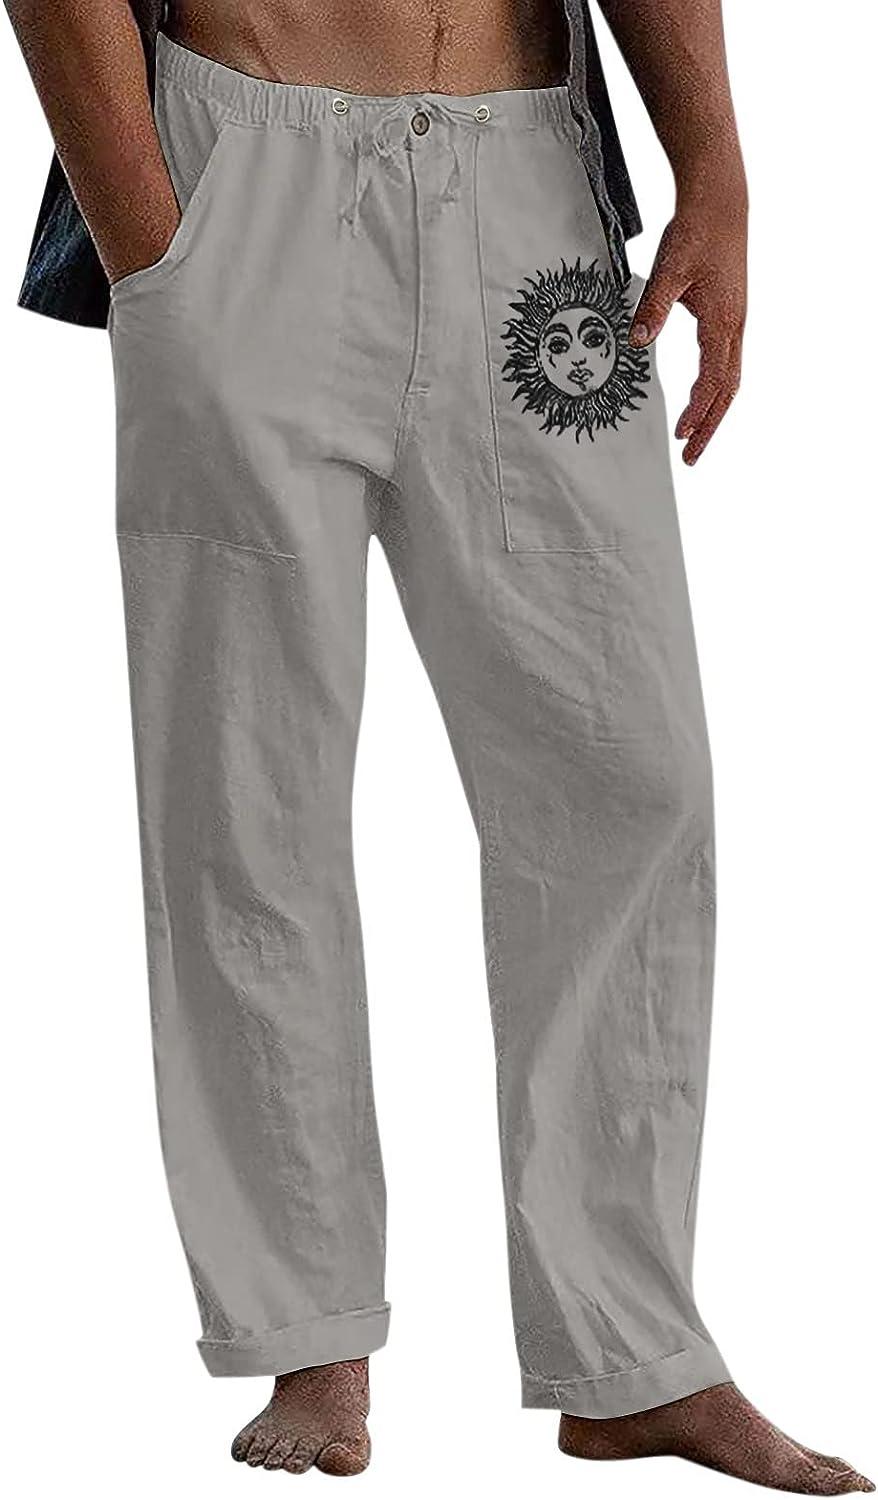 Elainilye Fashion Plus Size Cargo Pants Cotton And Linen Pants For Men  Elastic Waist Breathable Soft Washed Casual Trousers Long Pants,Gray 